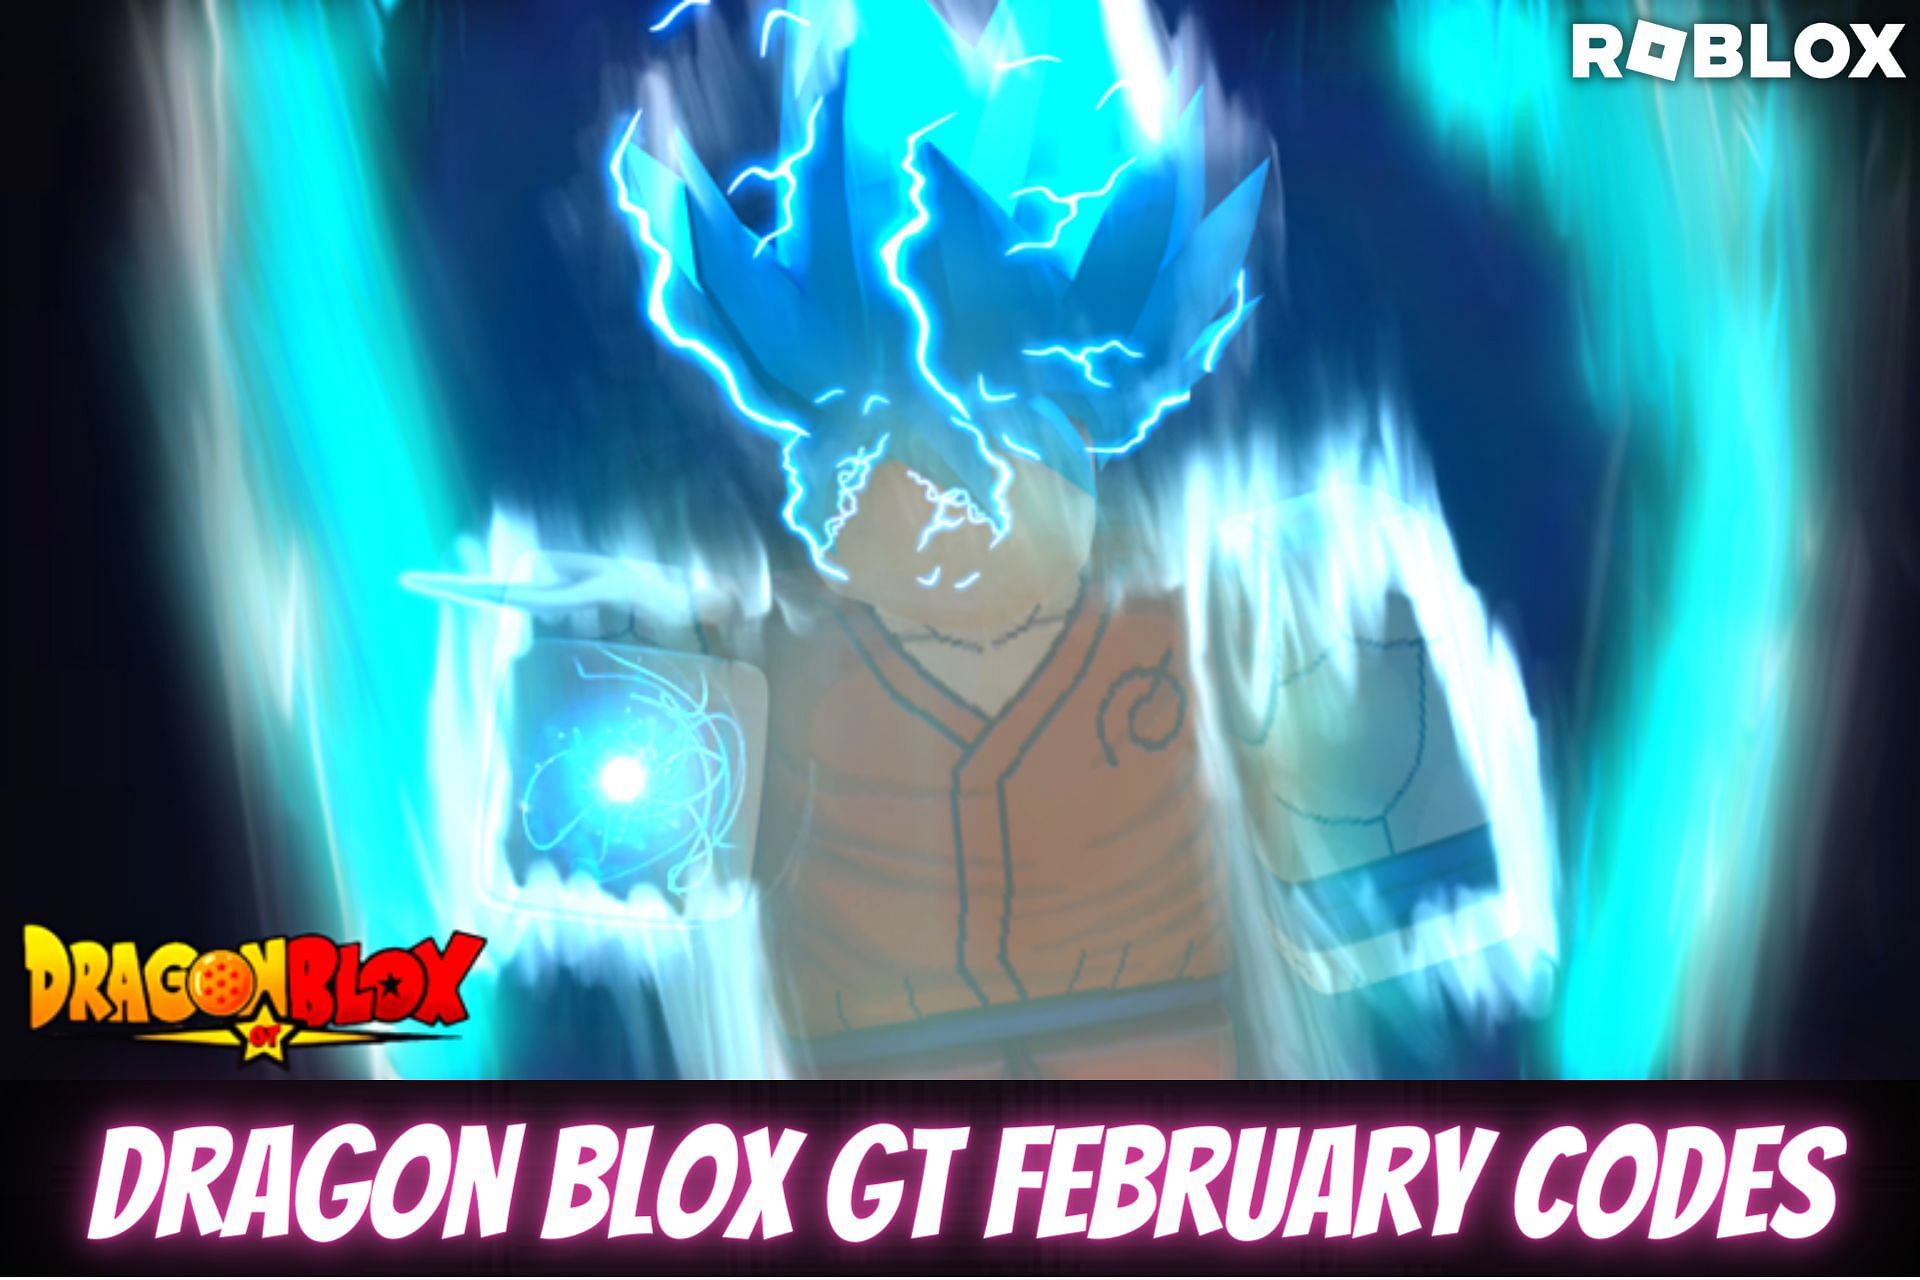 Roblox Dragon Blox GT codes (February 2023)